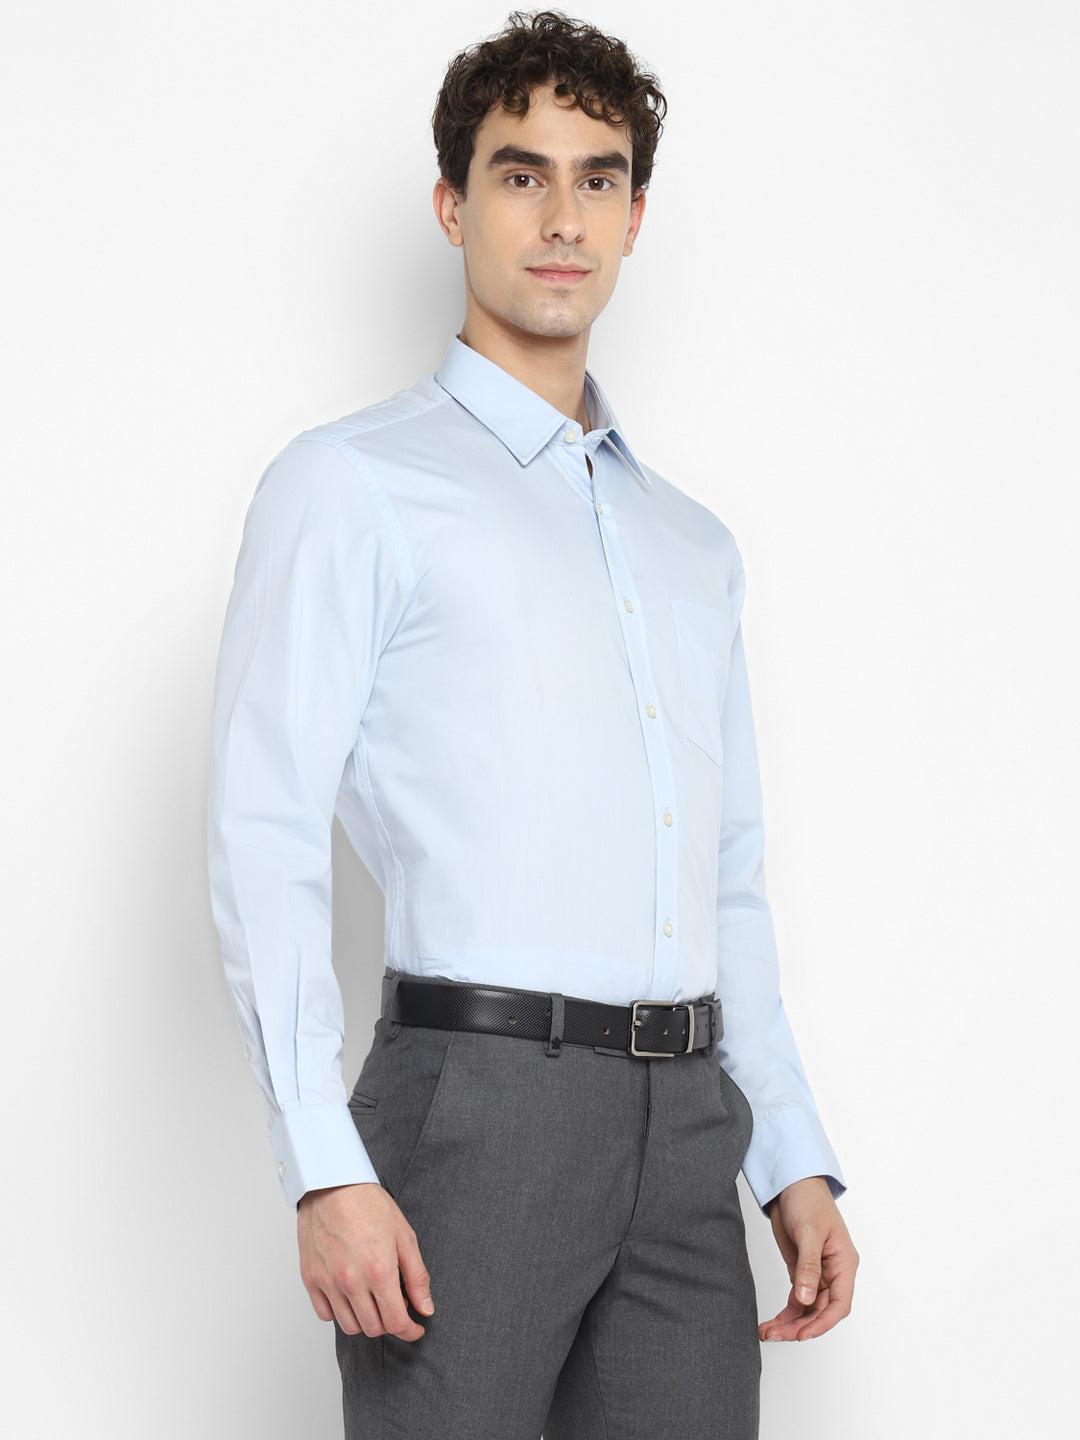 Solid Blue Regular Fit Formal Shirt